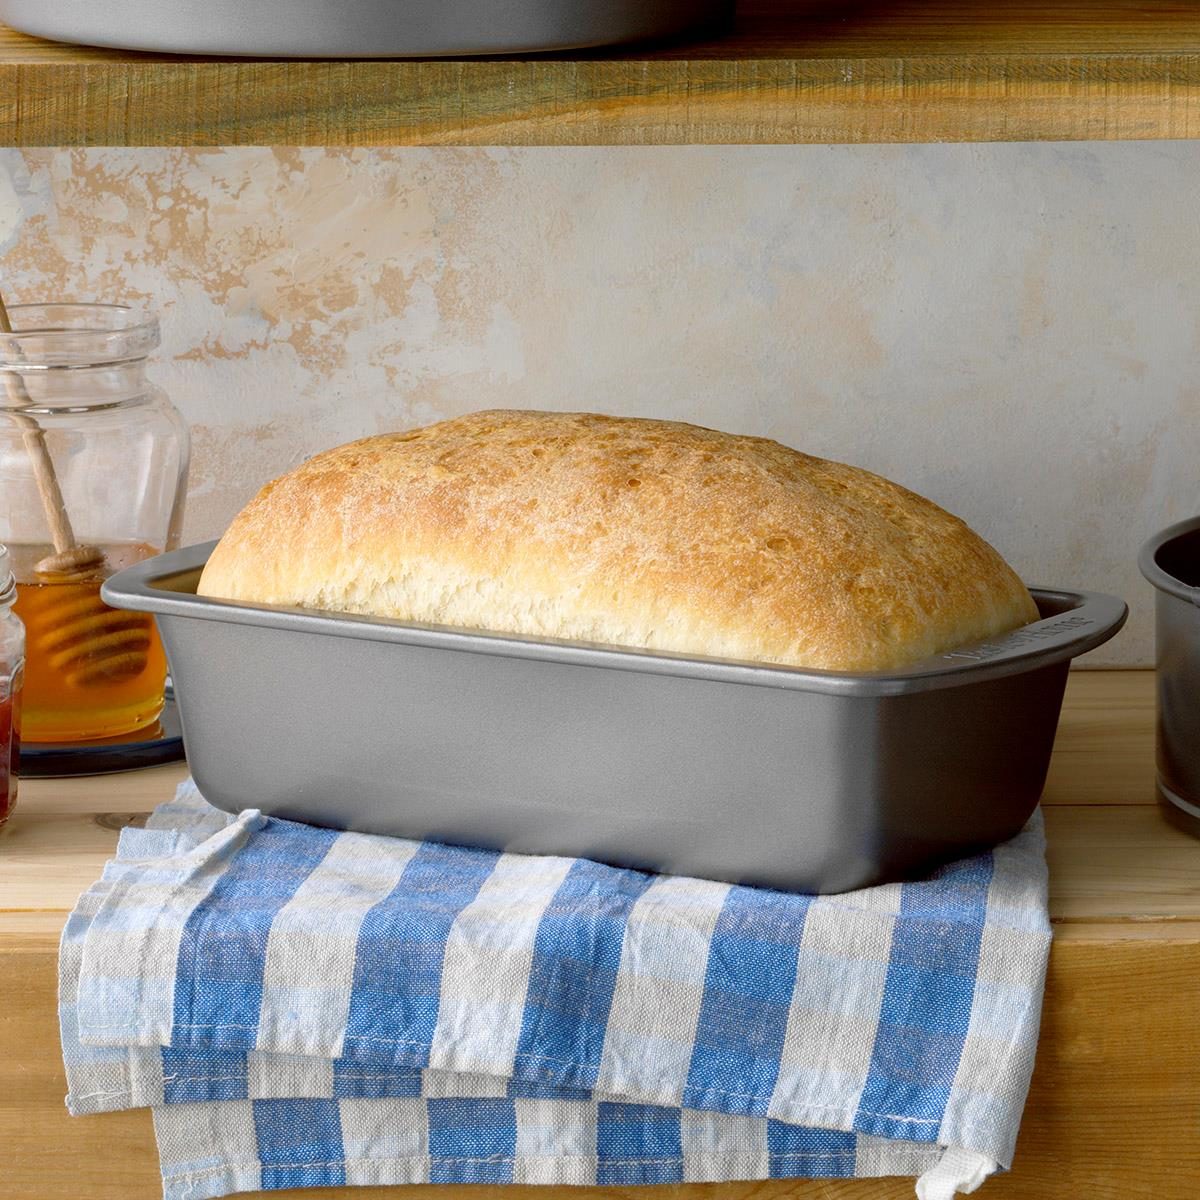 Basic Homemade Bread | Reader's Digest
